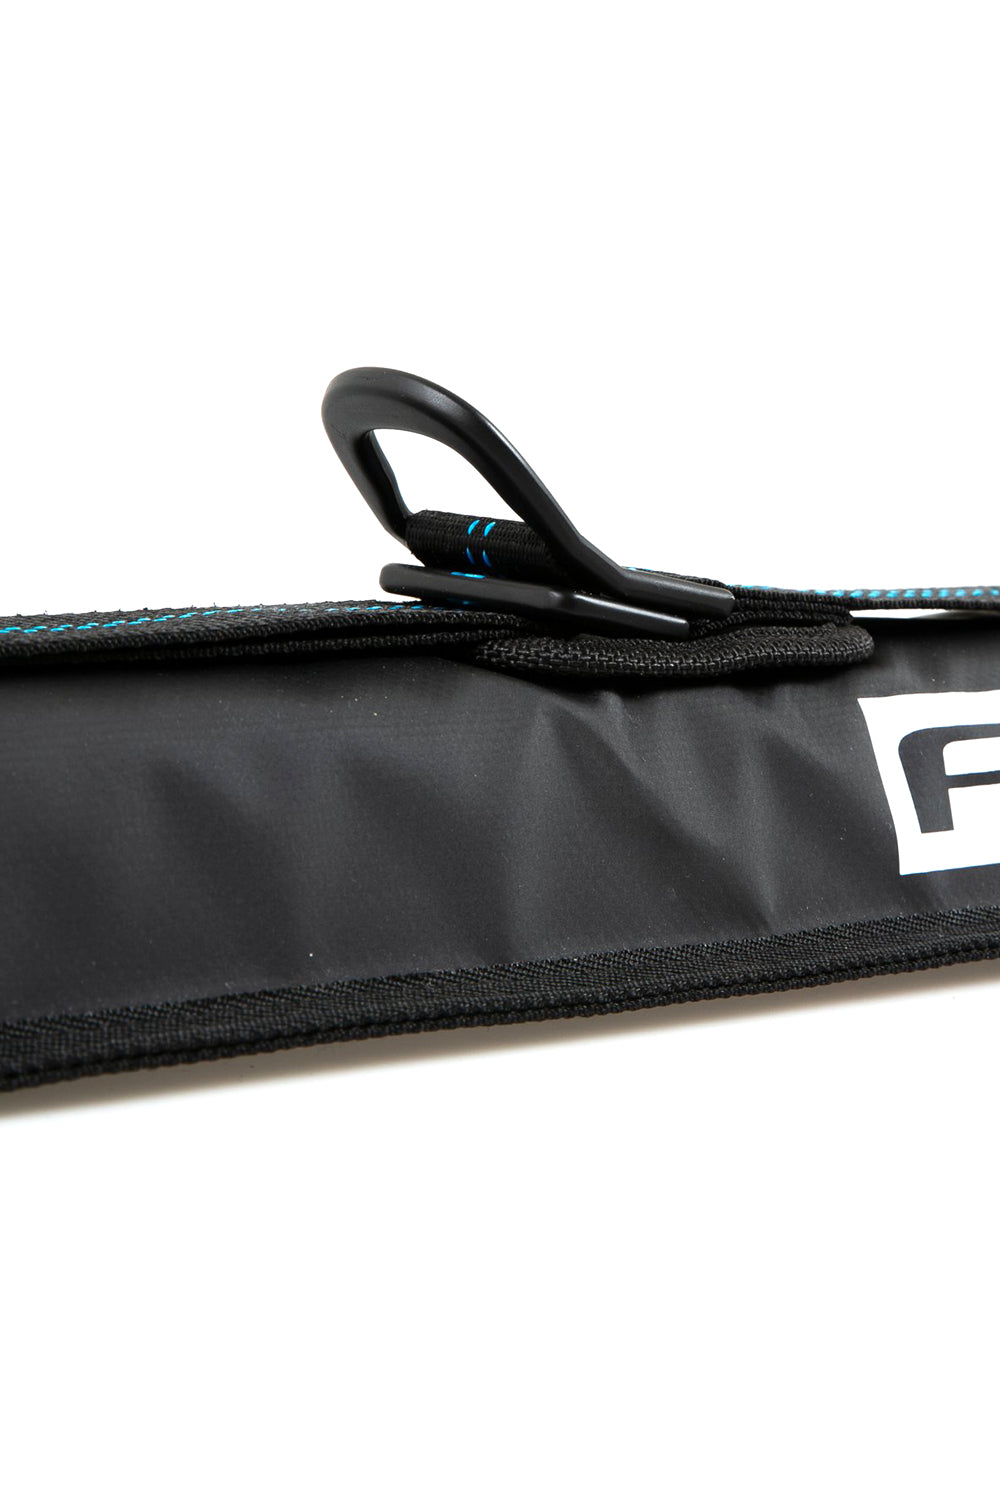 FCS D-Ring Surfboard Soft Racks